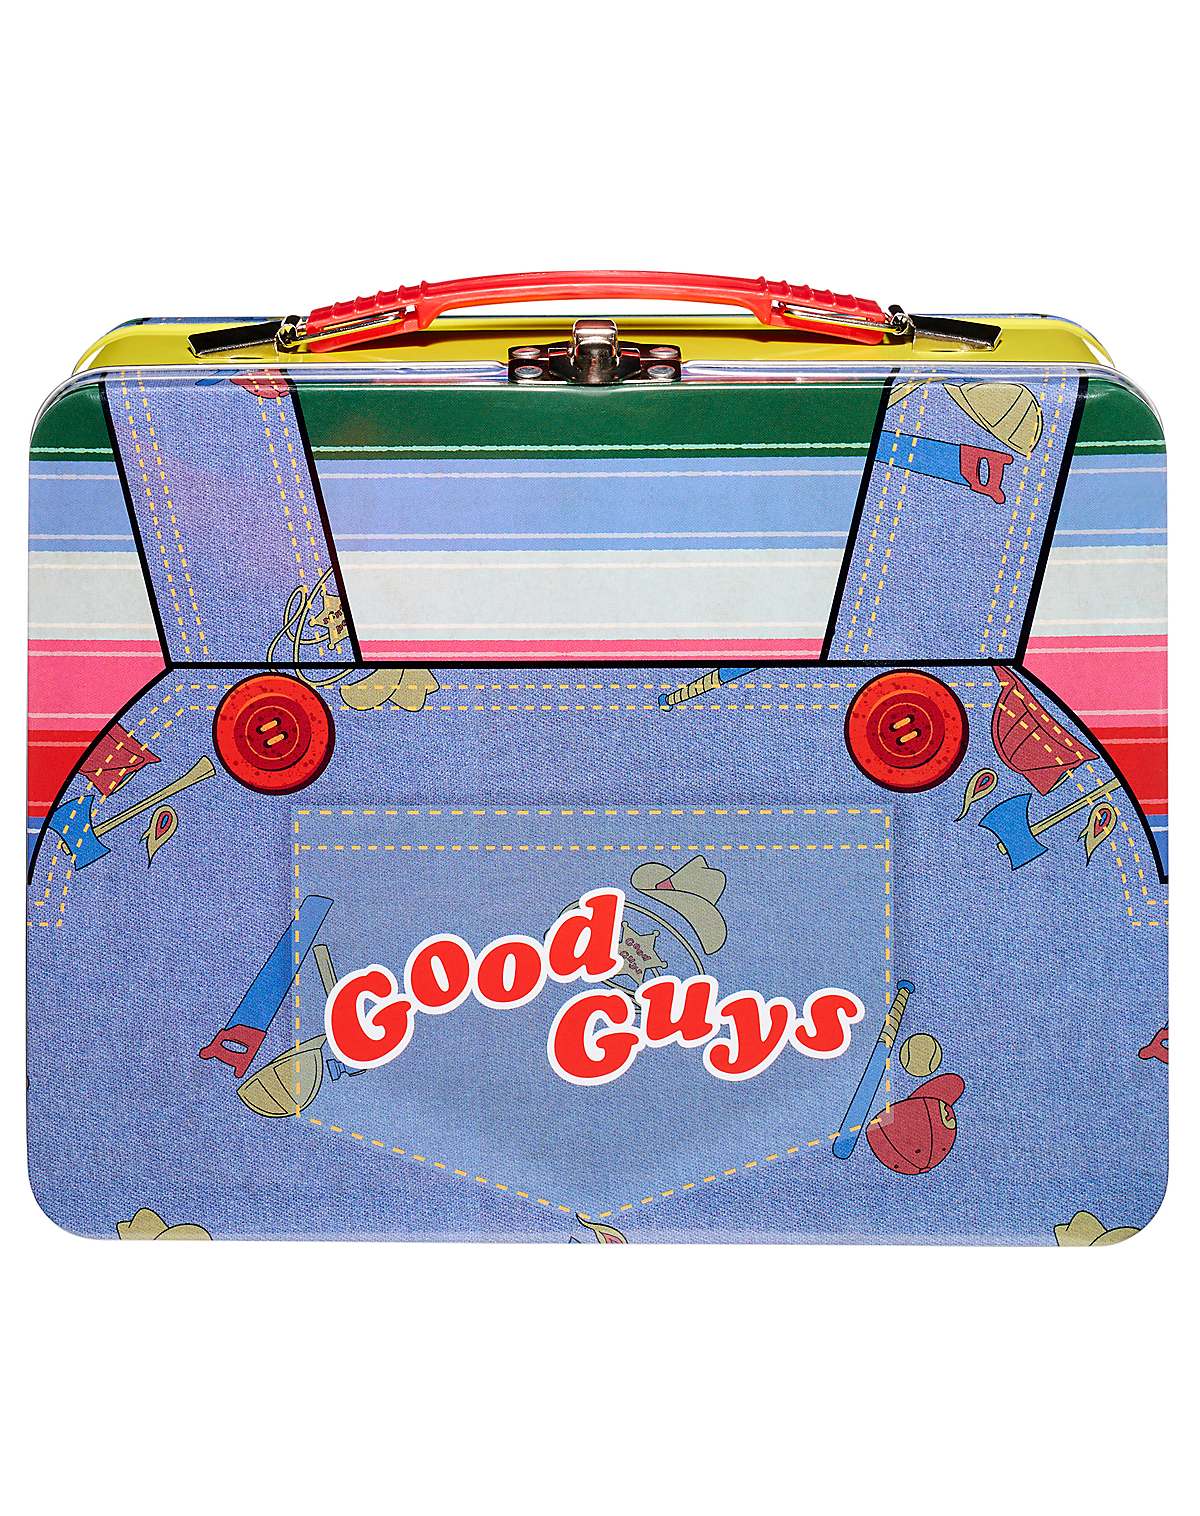 Good Guys Chucky Lunch Box – Child’s Play